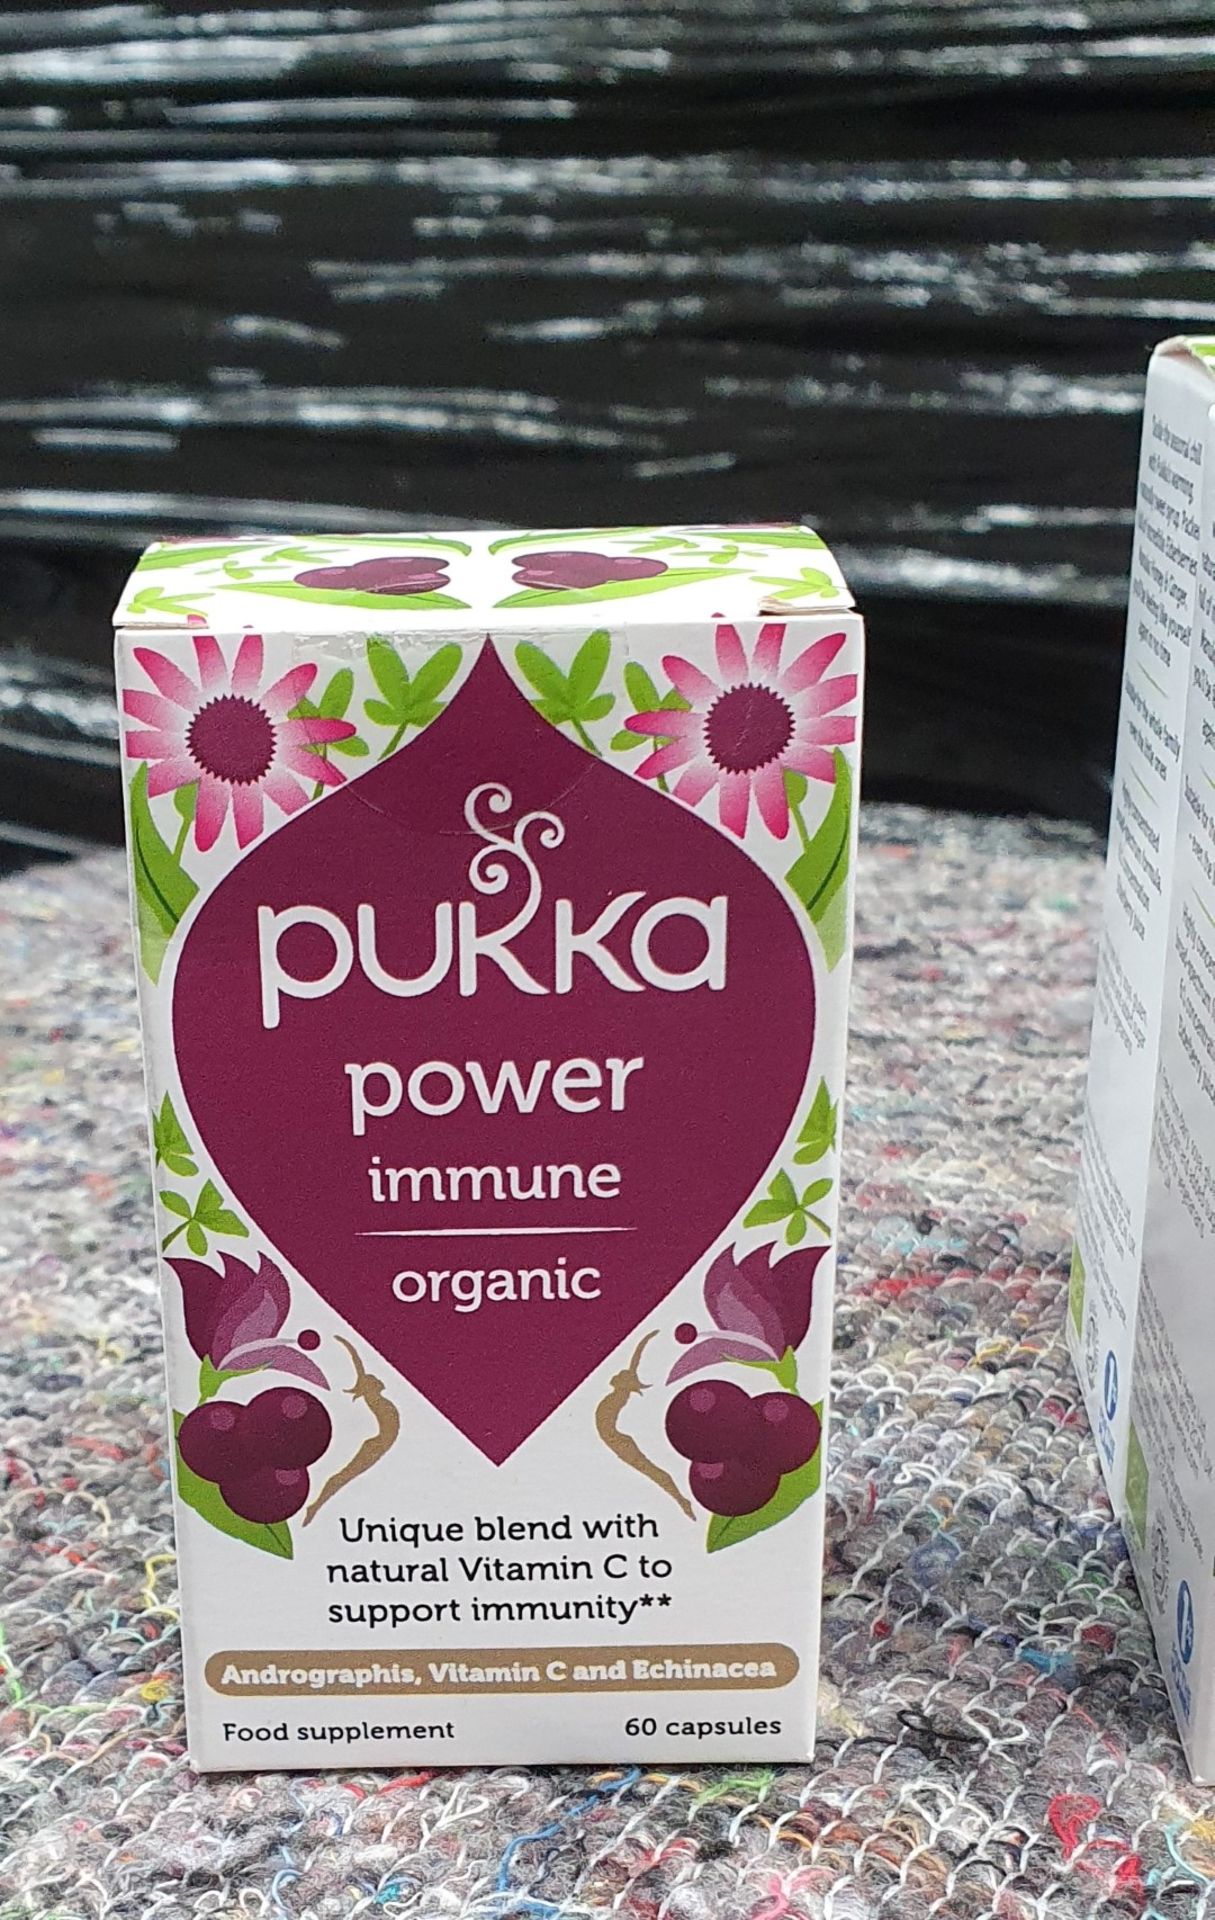 16 x Assorted Tea Products Including Pukka Organic Tea, Teapigs Tea and Aura Chai Tea - New - Image 5 of 10